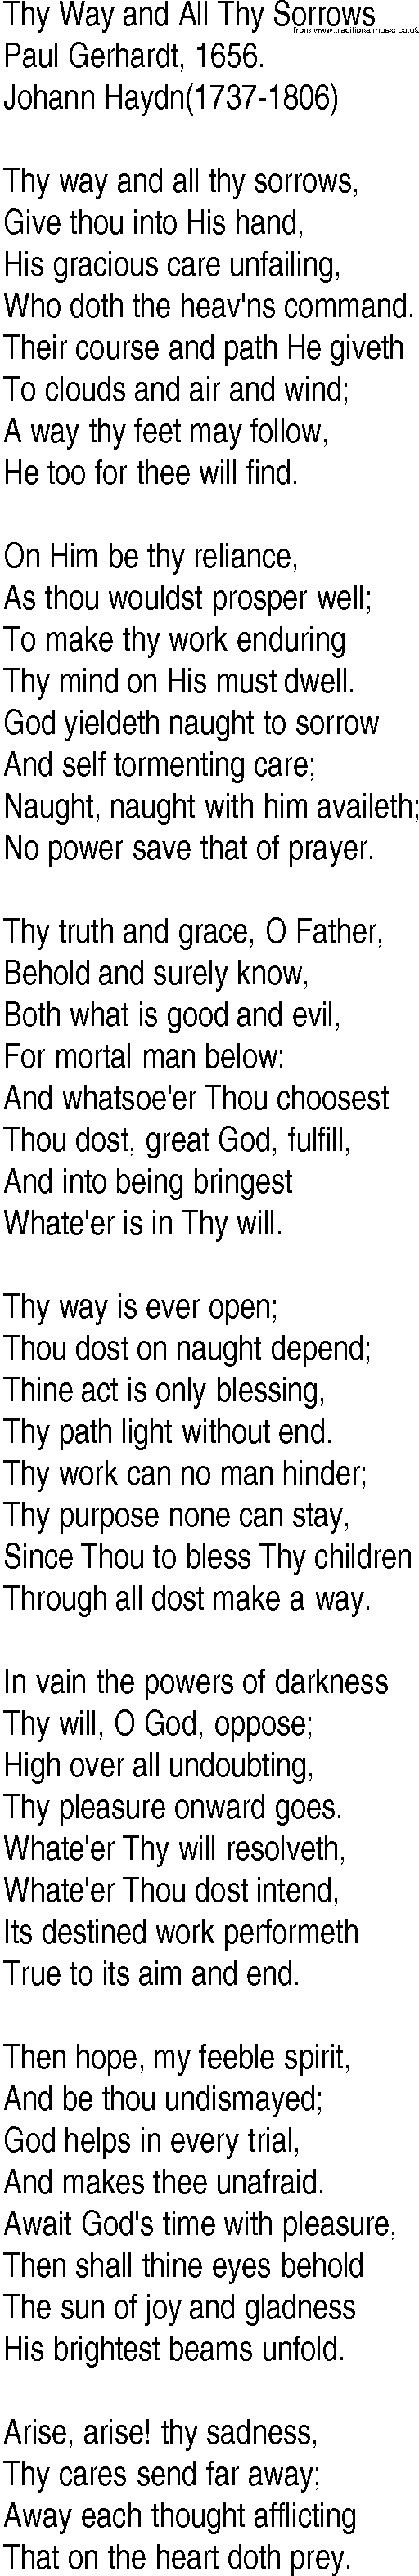 Hymn and Gospel Song: Thy Way and All Thy Sorrows by Paul Gerhardt lyrics